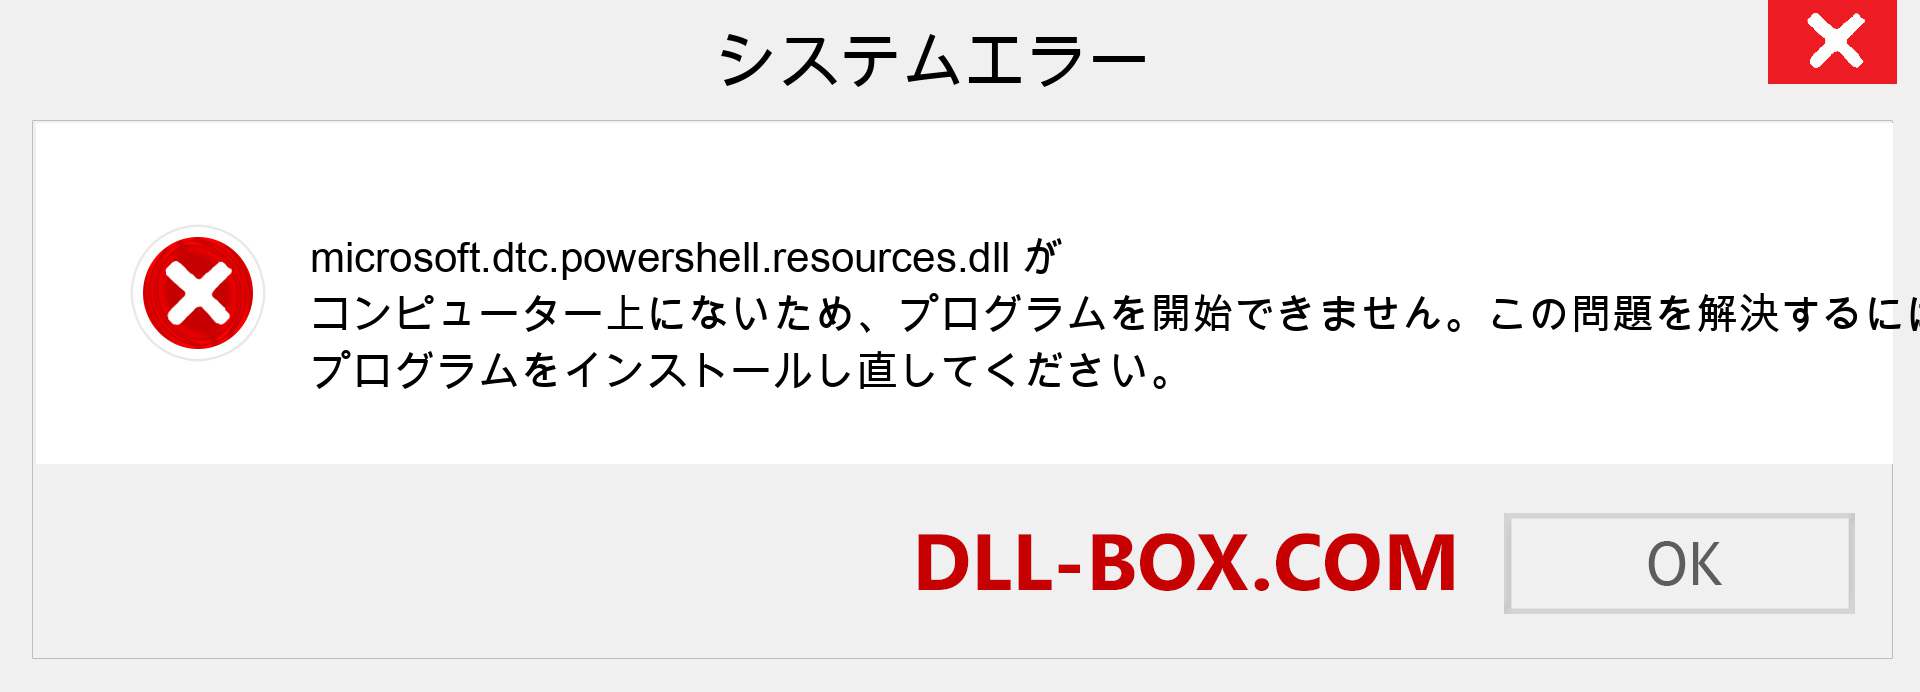 microsoft.dtc.powershell.resources.dllファイルがありませんか？ Windows 7、8、10用にダウンロード-Windows、写真、画像でmicrosoft.dtc.powershell.resourcesdllの欠落エラーを修正